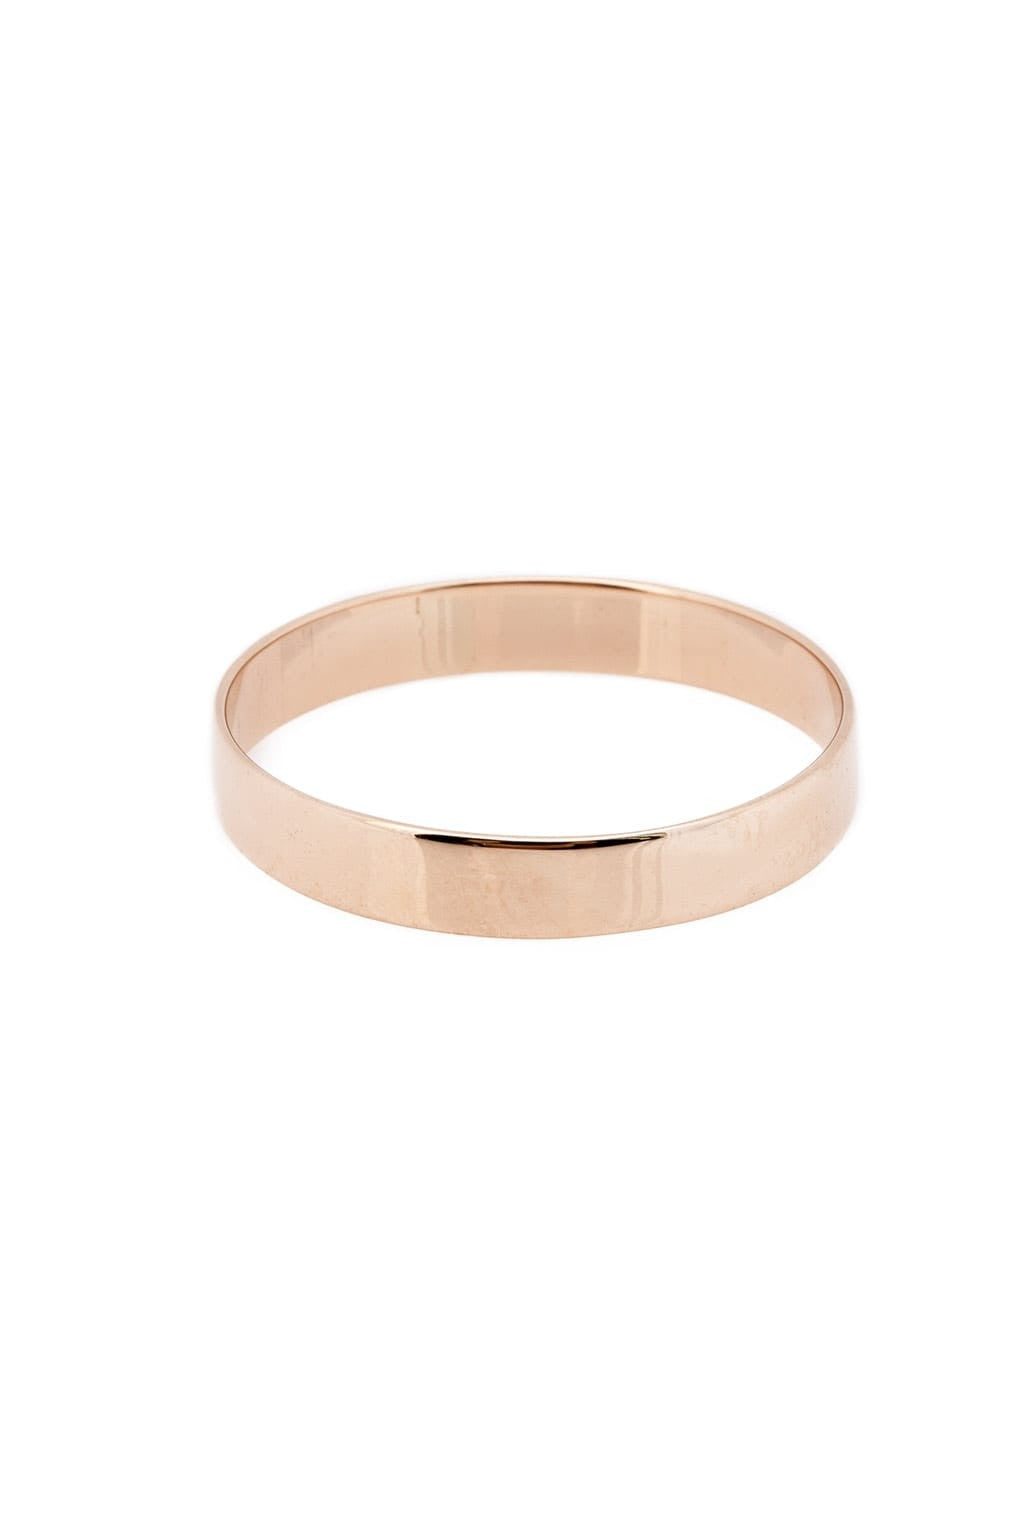 Band gold ring